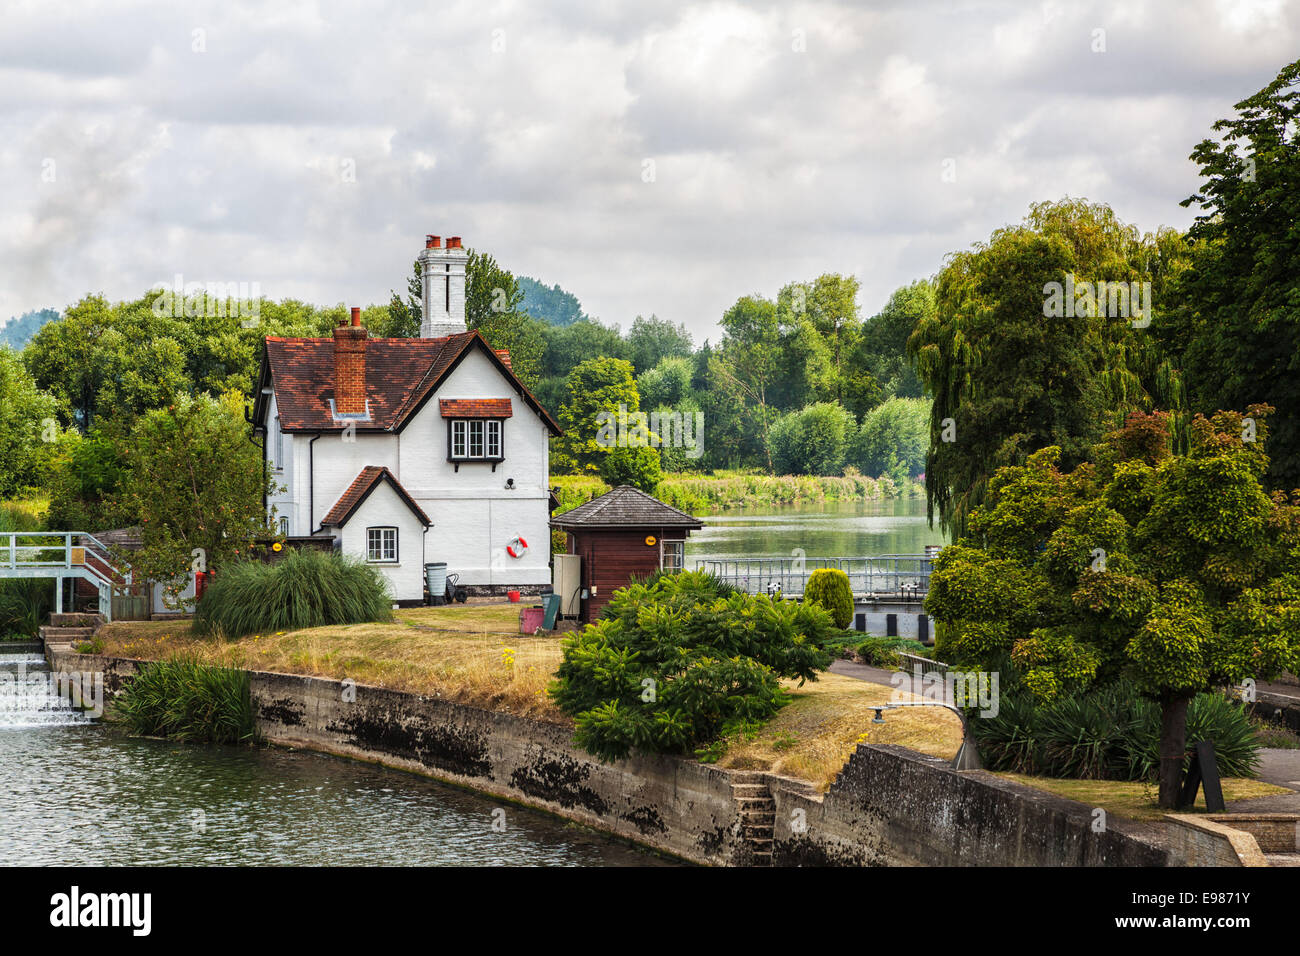 White House in der Nähe der Themse Fluss Kanal, englische Landschaft Hütte neben dem Fluss-Kanal. Stockfoto